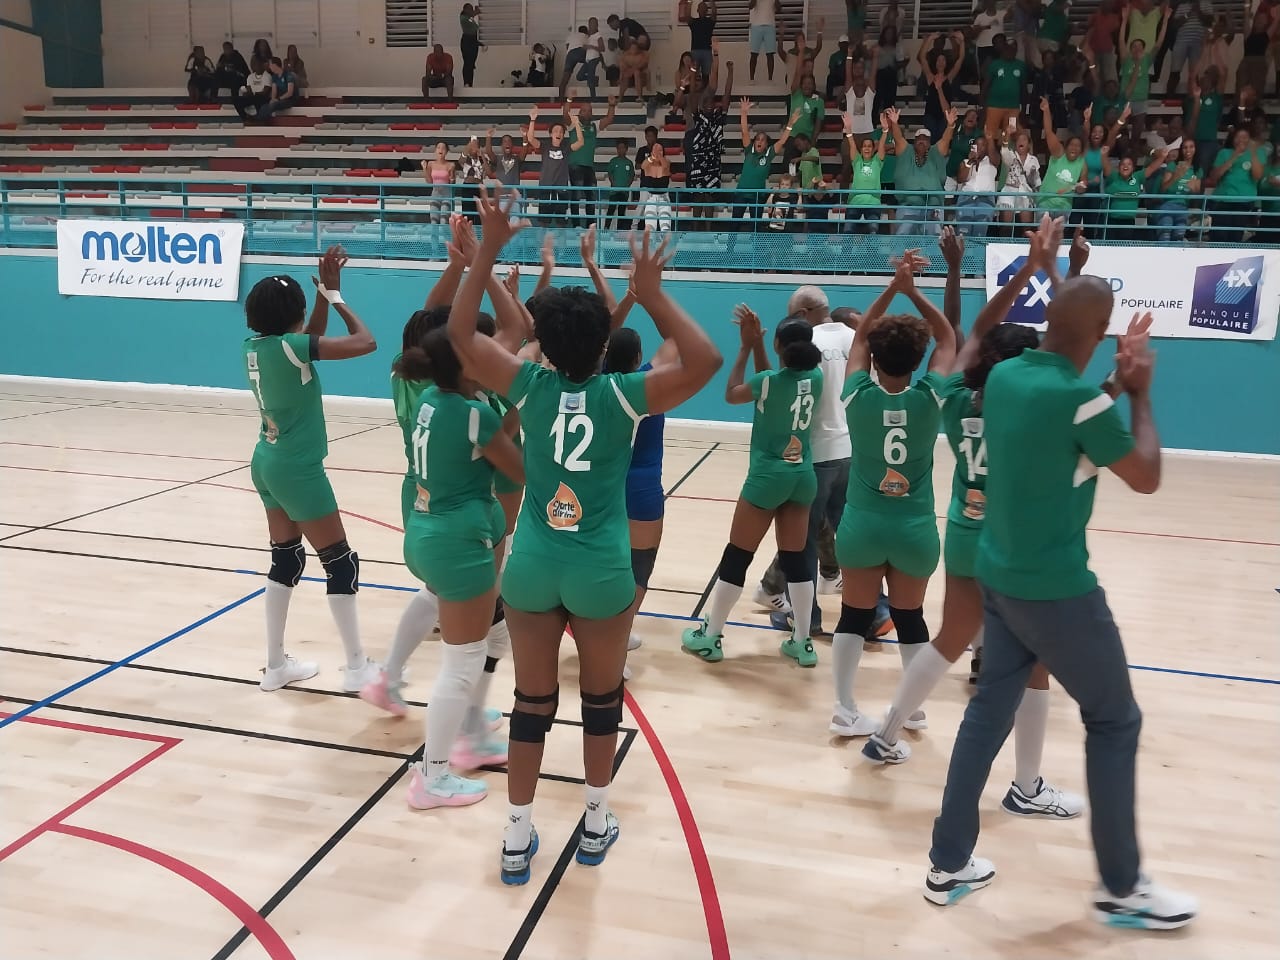     Volley-ball : l’équipe féminine de l’Espoir bat le Rayon

